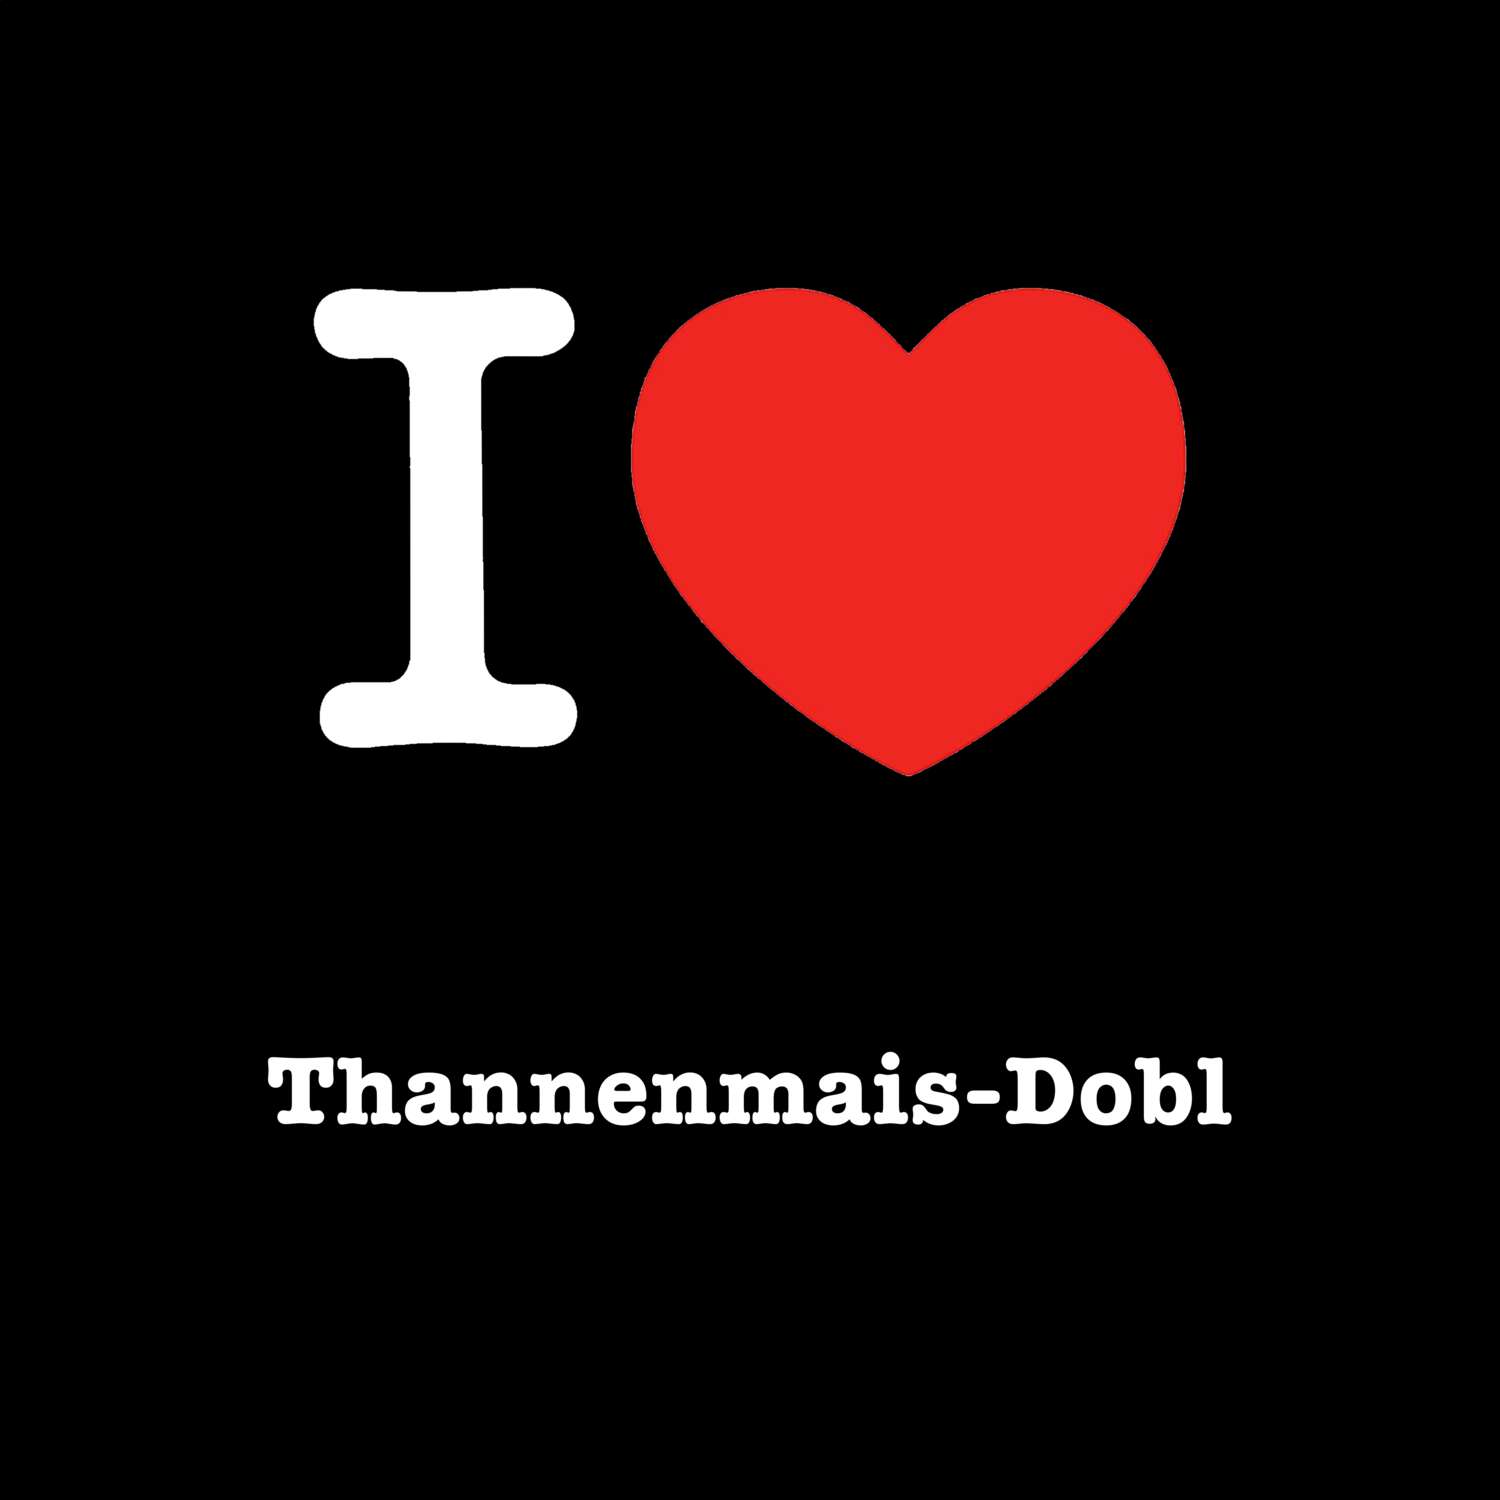 Thannenmais-Dobl T-Shirt »I love«